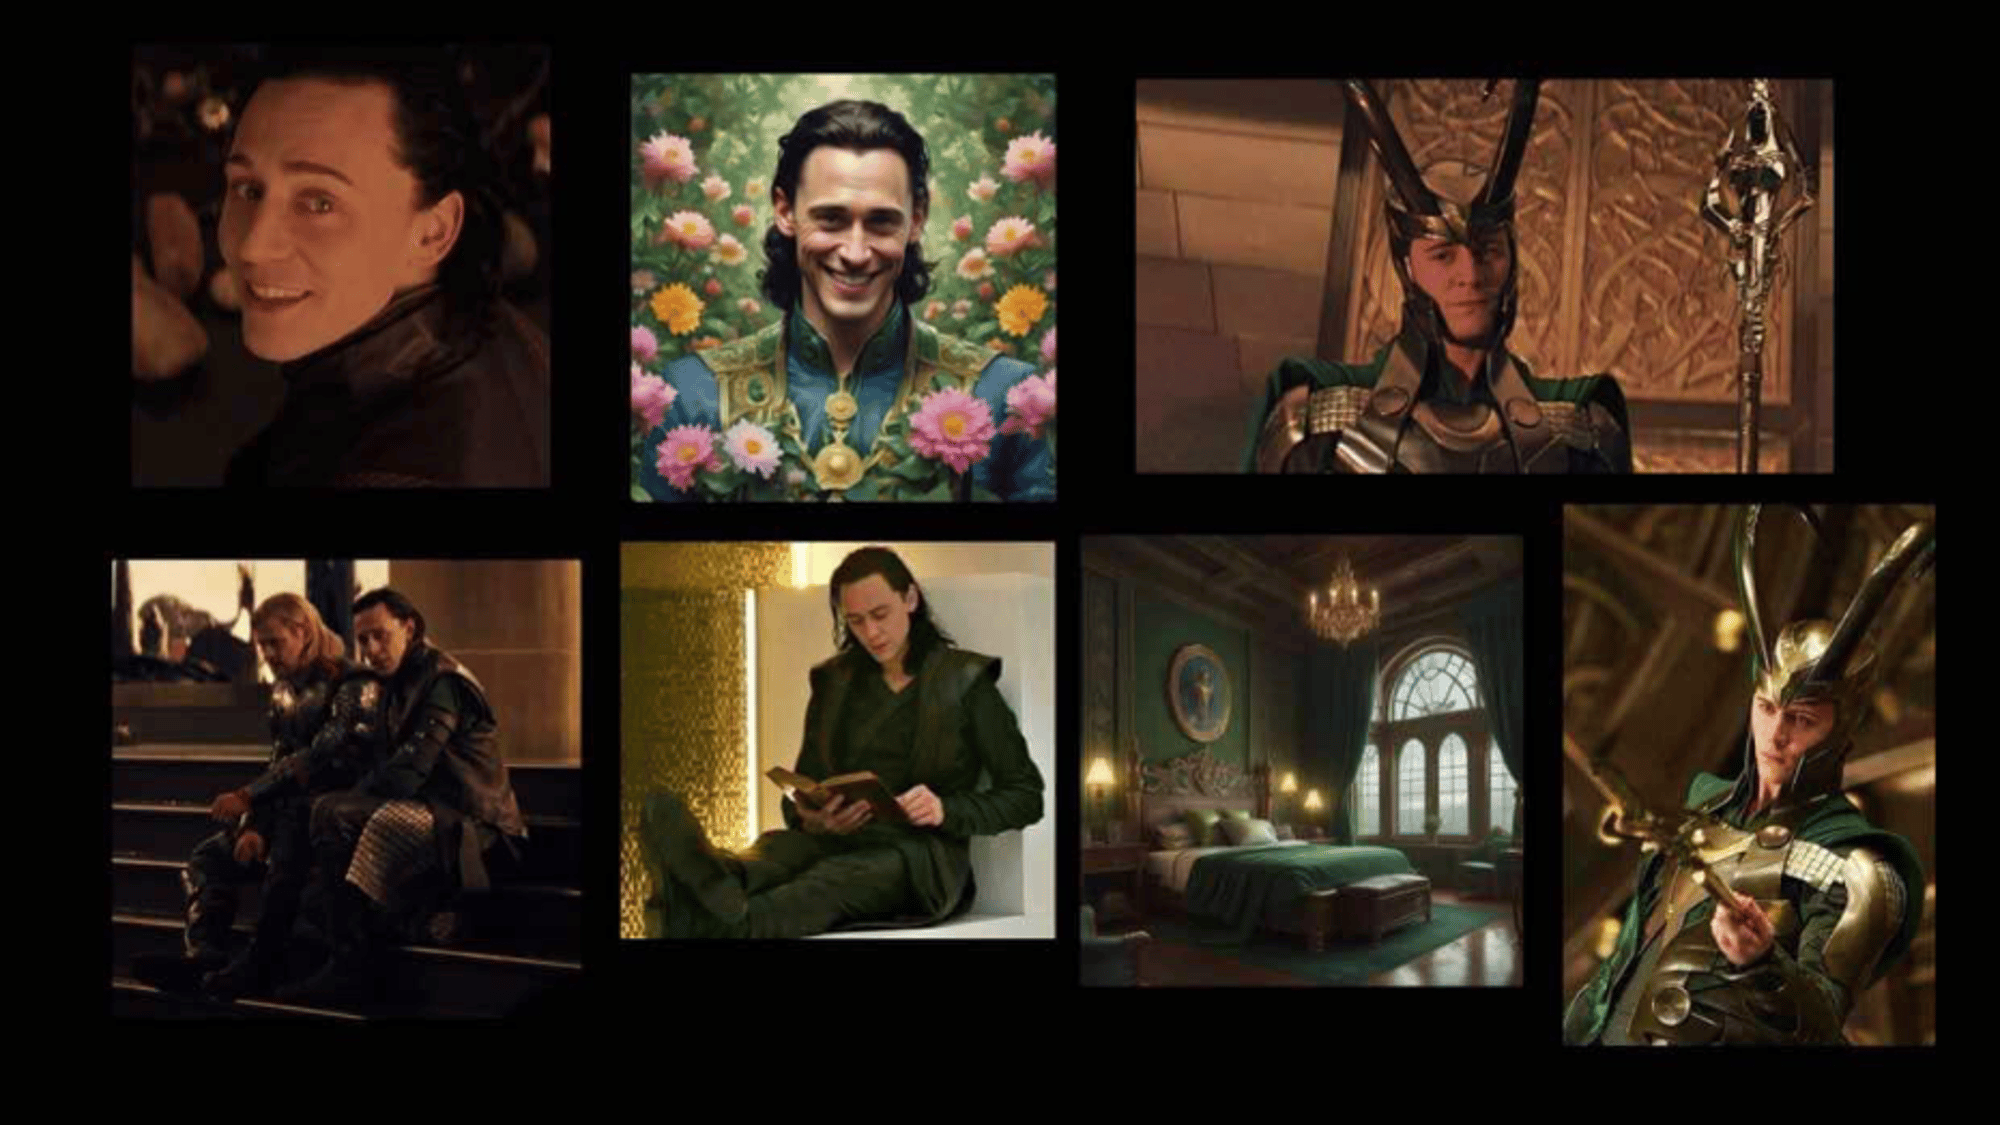 Your Asgard Prince, Loki